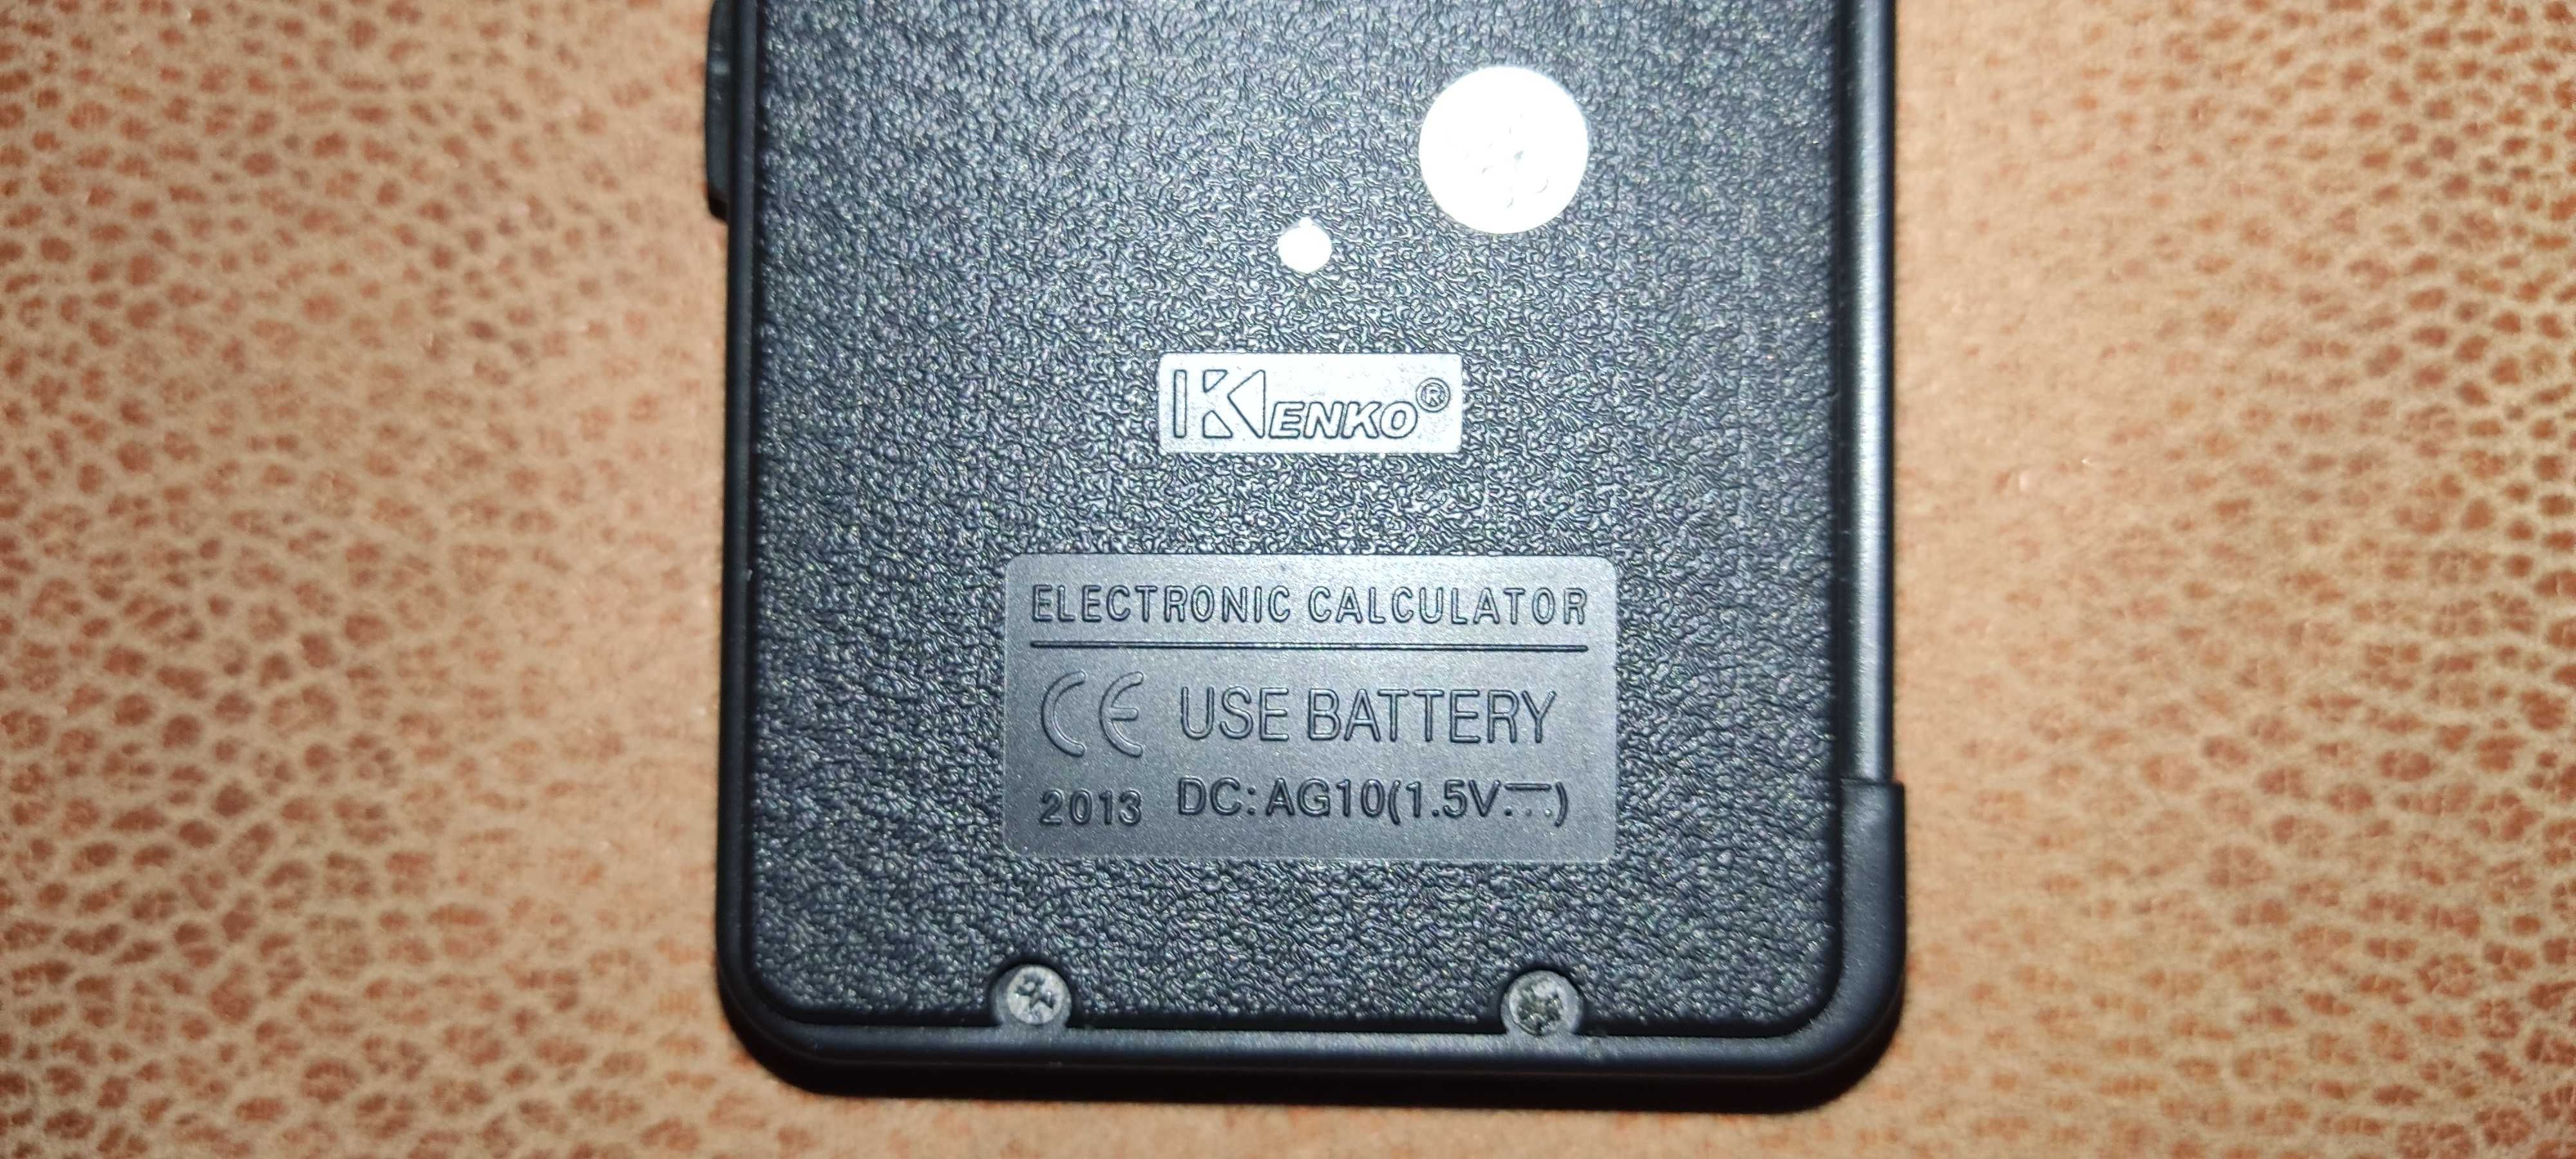 Карманный калькулятор KENKO  (KK-568A) Япония + две батарейки